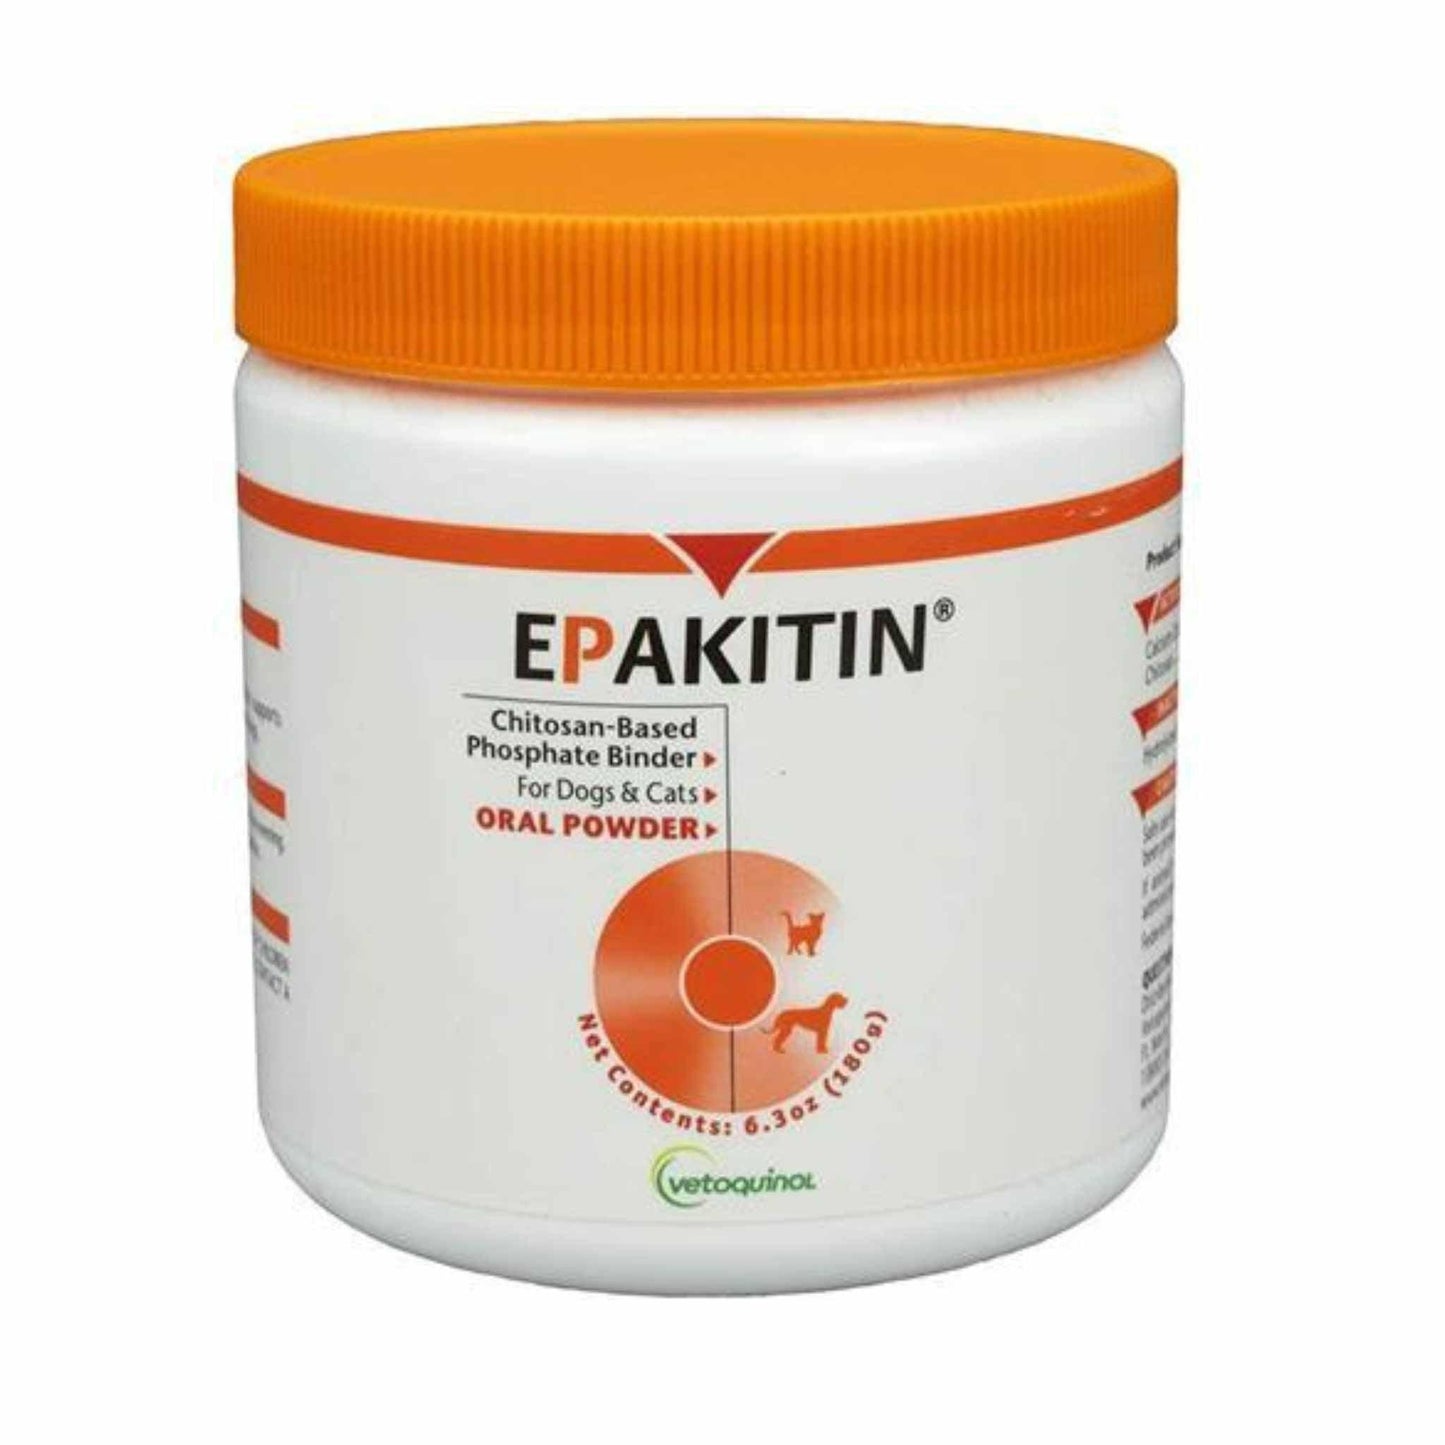 Epatikin Oral Powder for Dogs - iloveleia.com